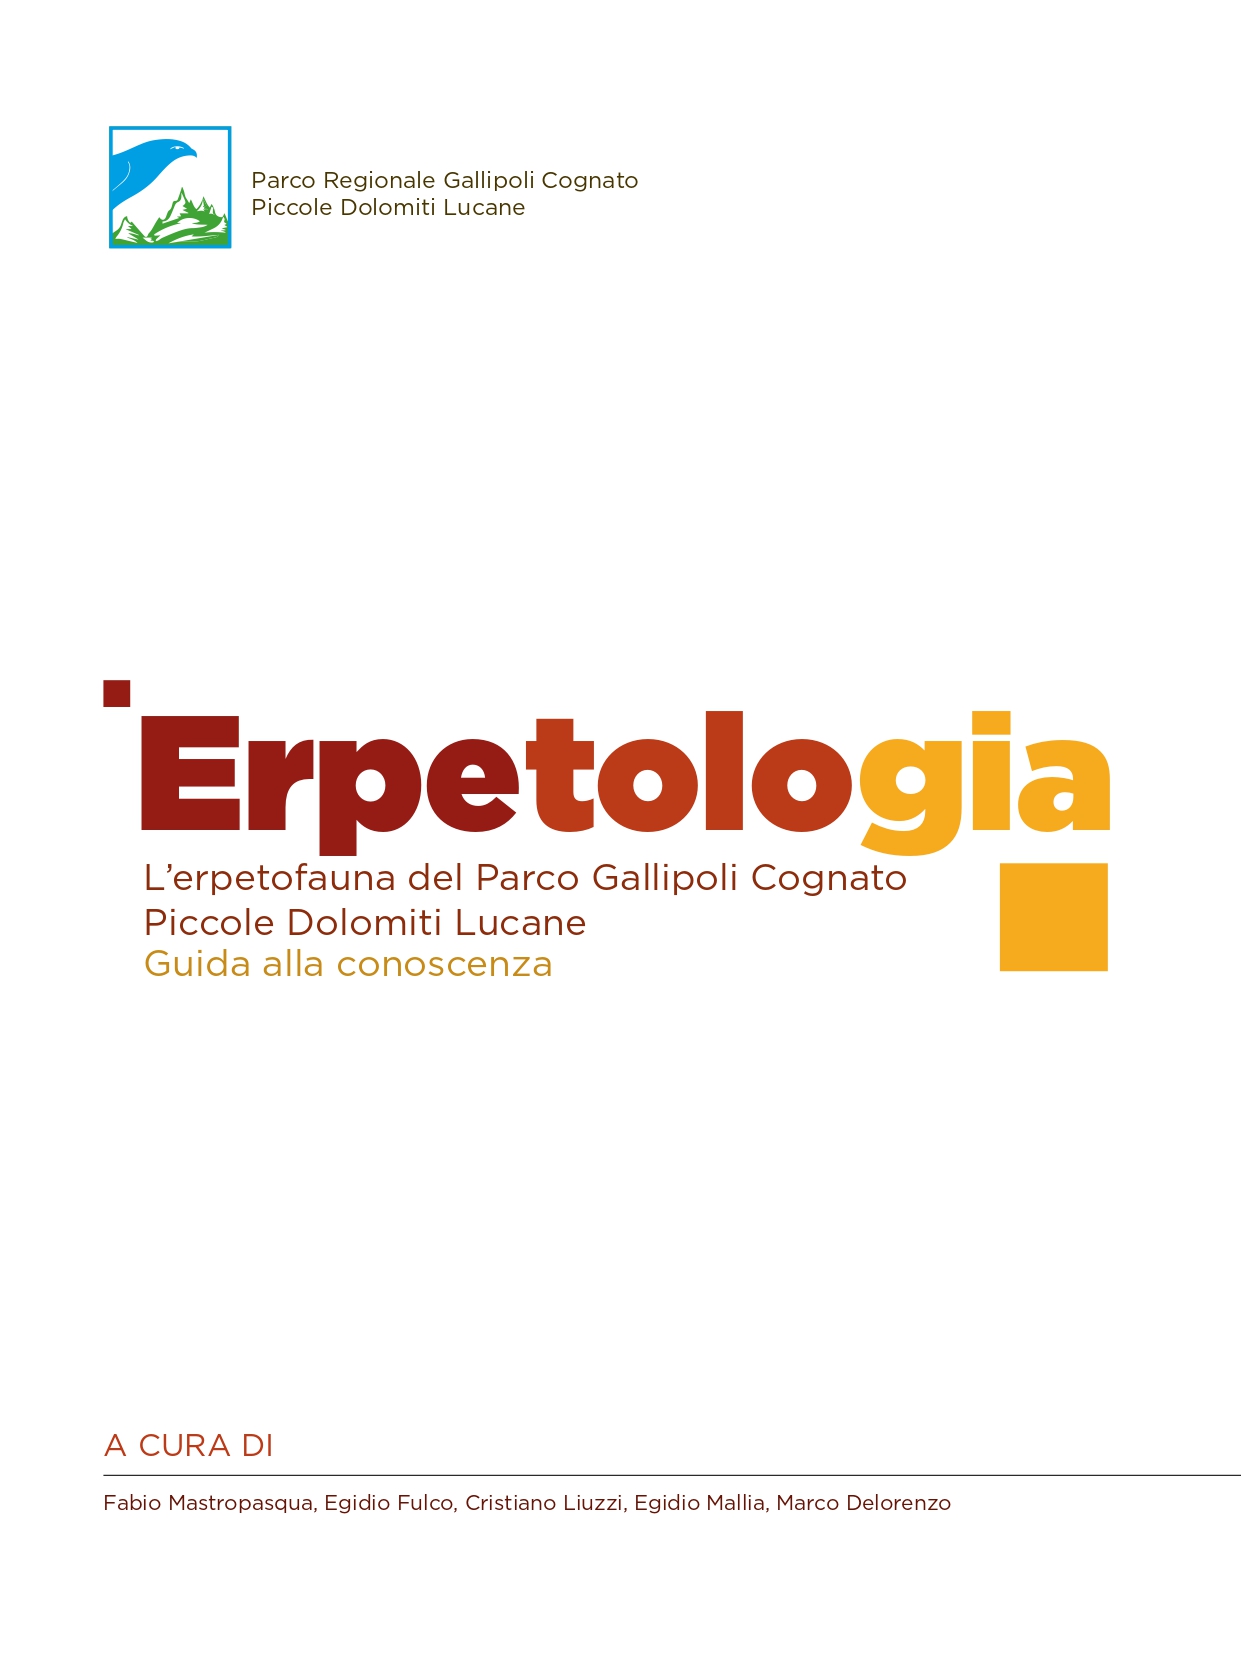 Erpetologia parco gallipoli cognato web pages to jpg 0001